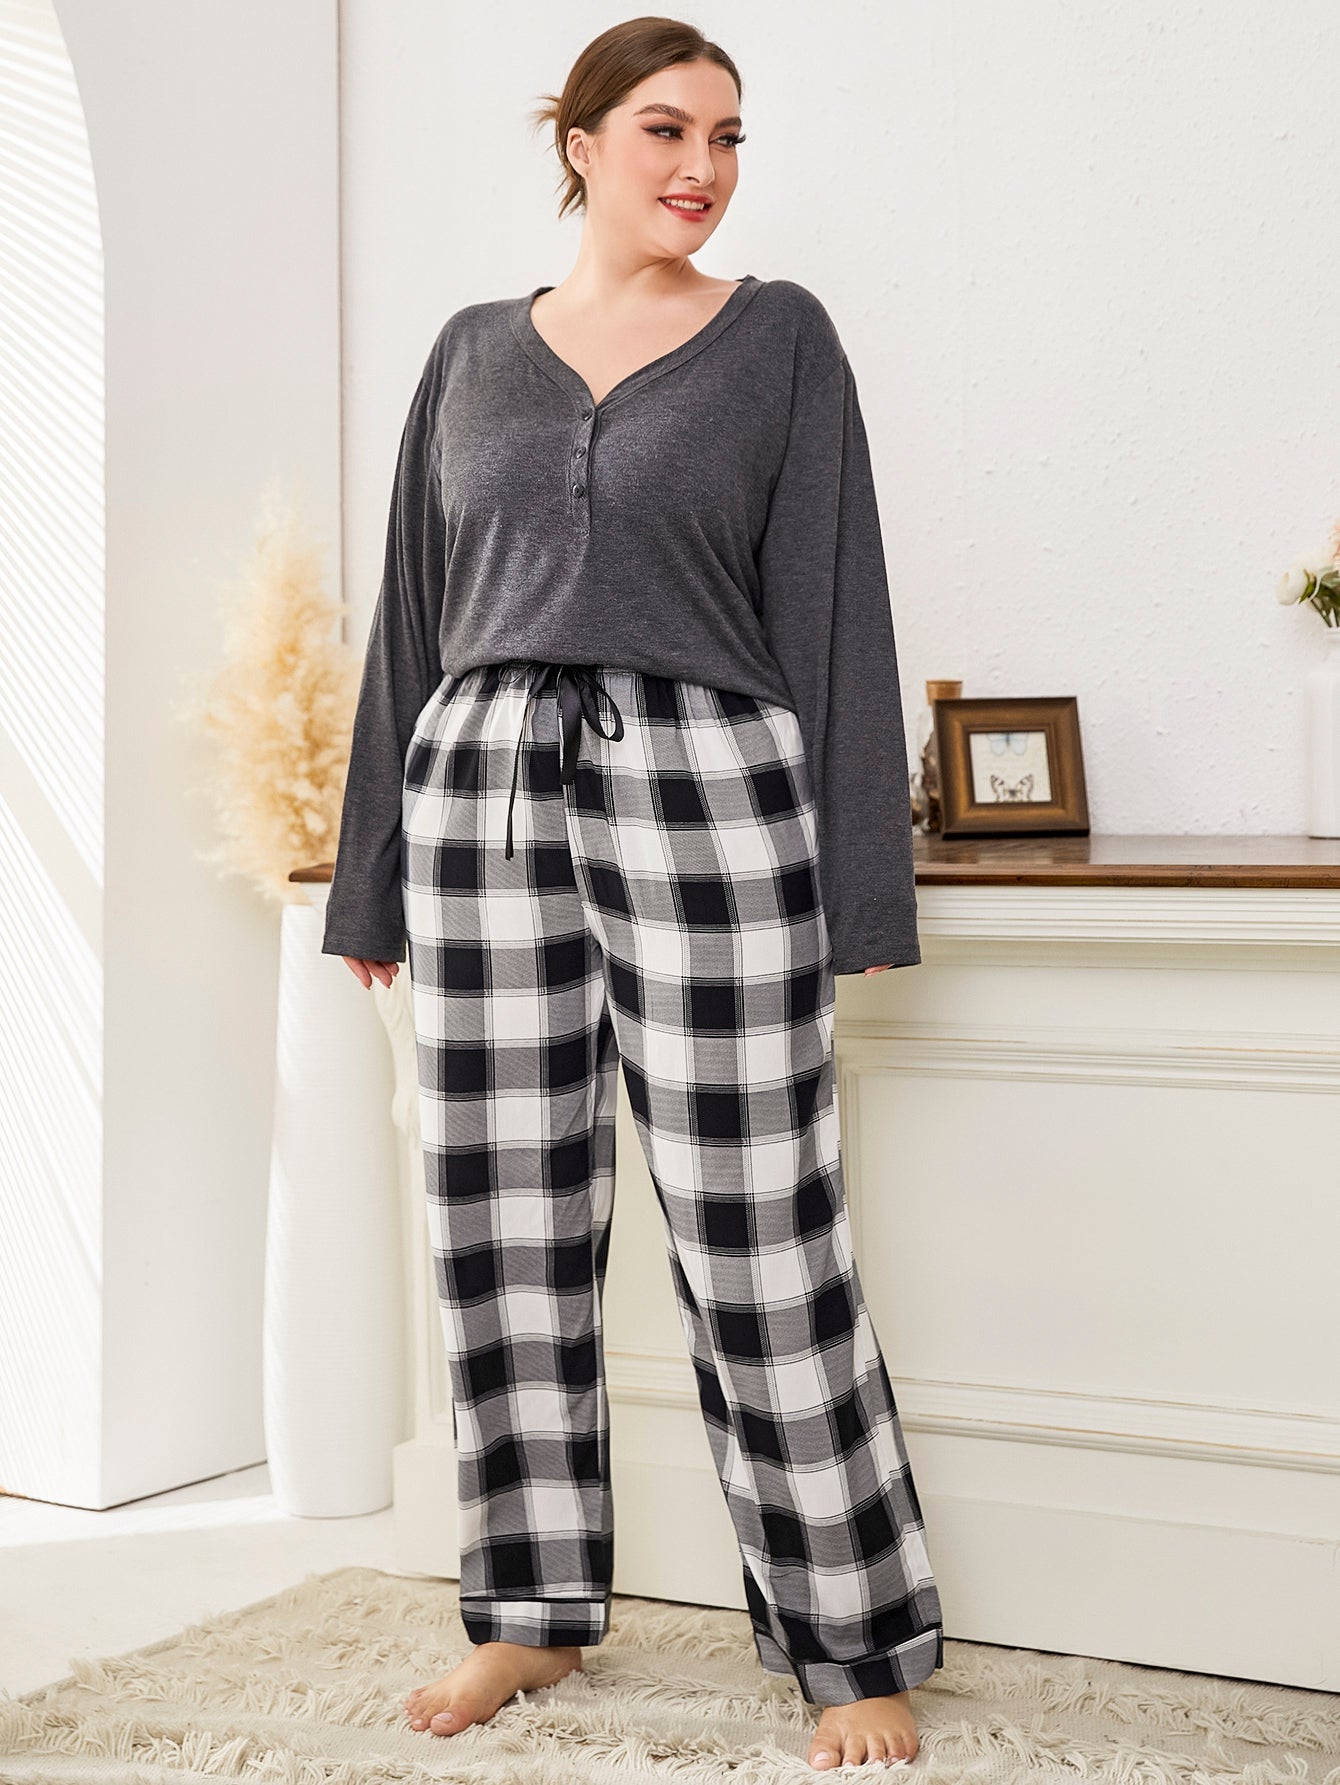 Women's Plus Size Pajamas Sets Long Sleeve with Plaid Pants Soft Sleepwear Sai Feel